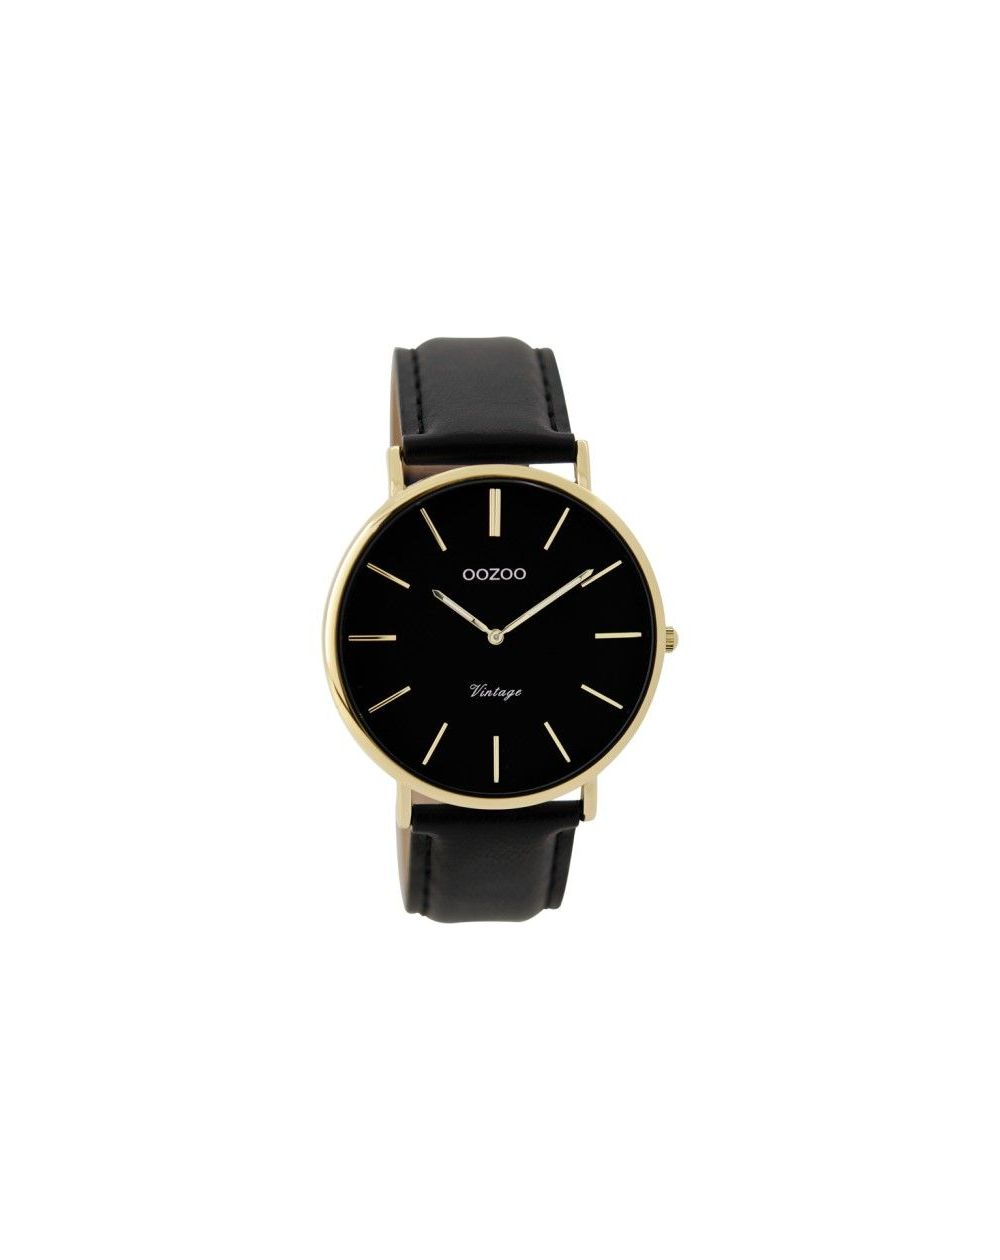 Montre Oozoo Timepieces C9300 - Marque de montre Oozoo